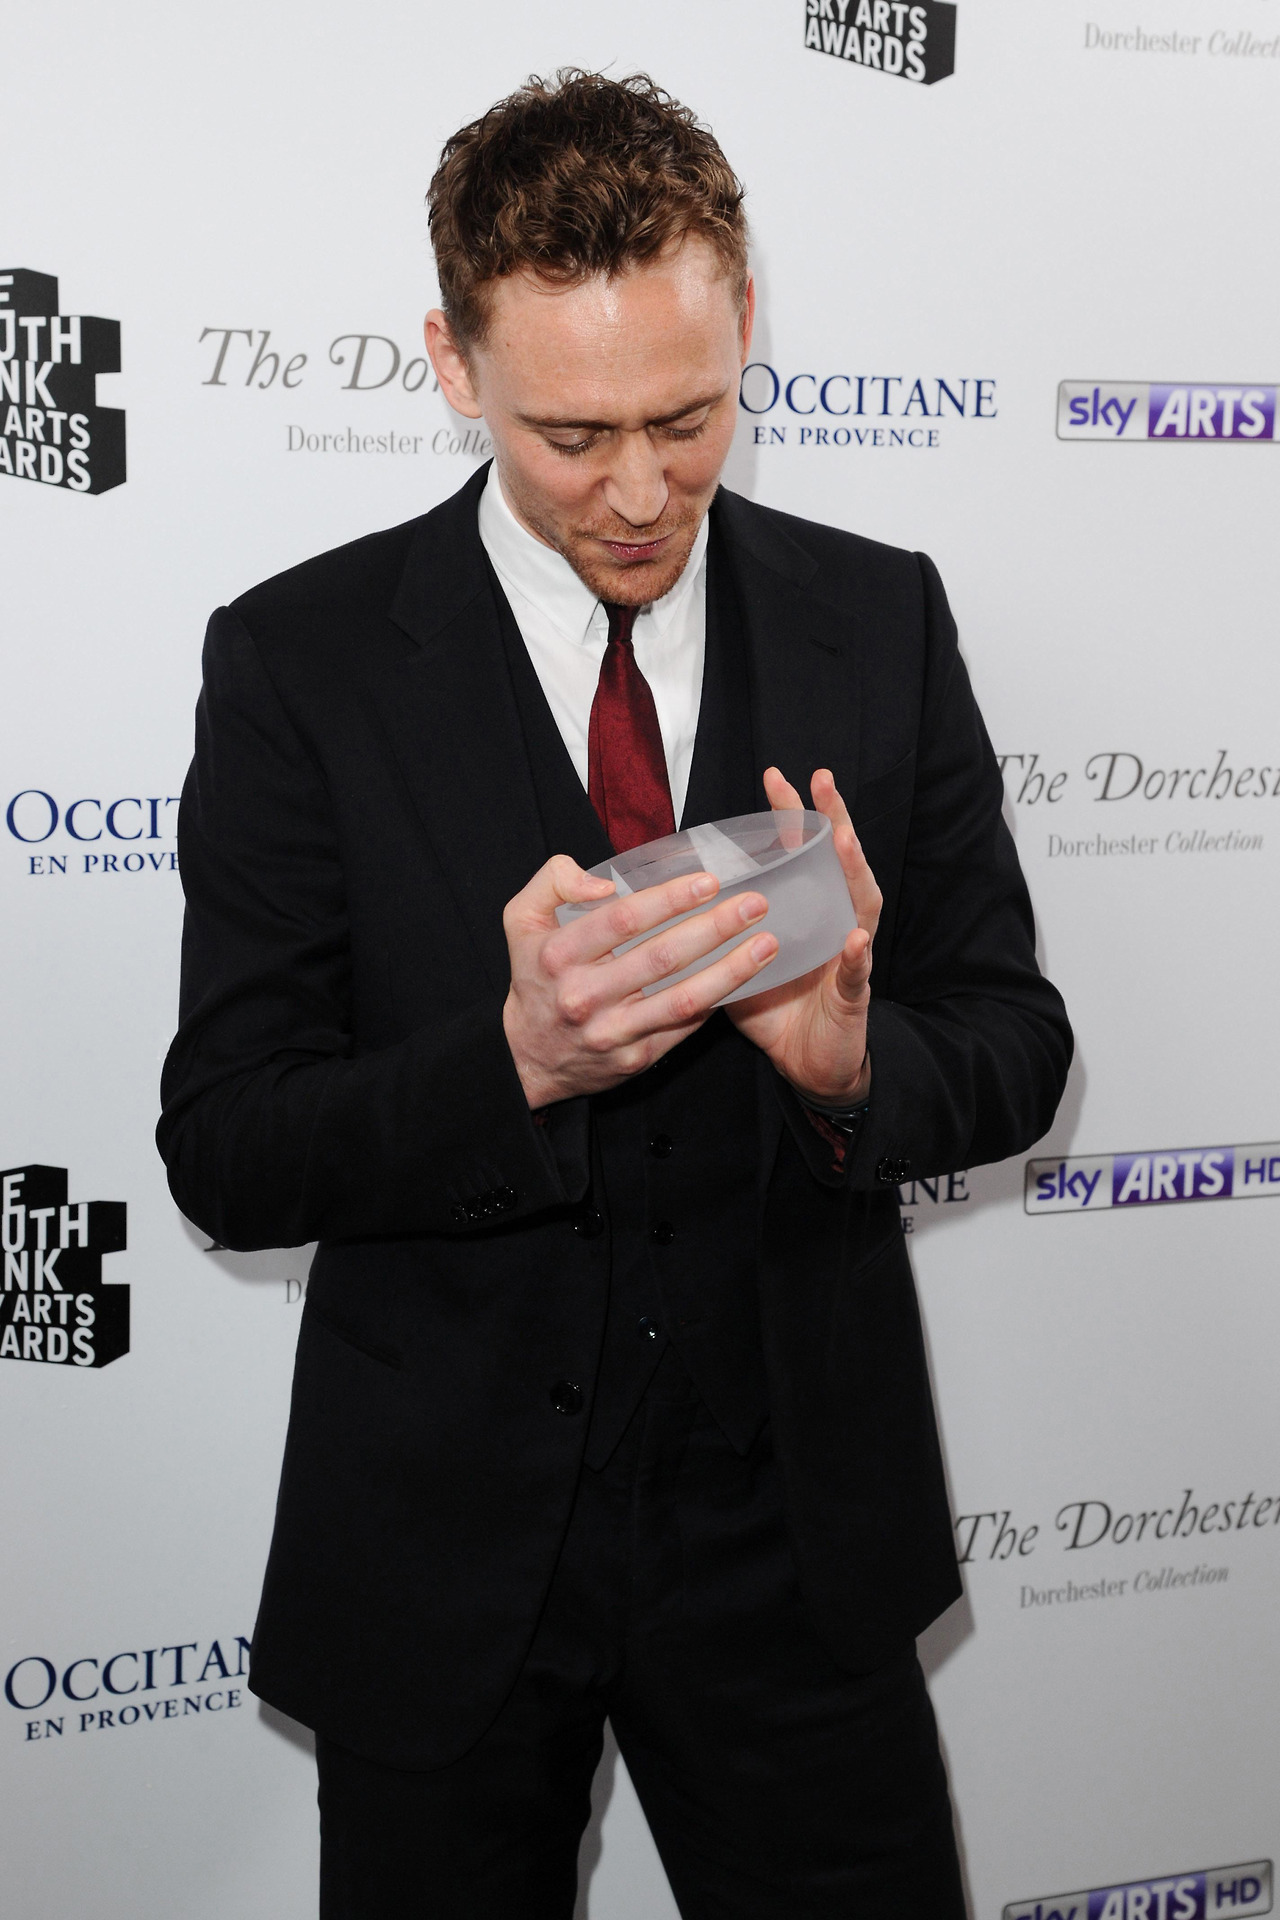 fai-hiddles:  Tom Hiddleston, winner of the Times Breakthrough Award, in the press